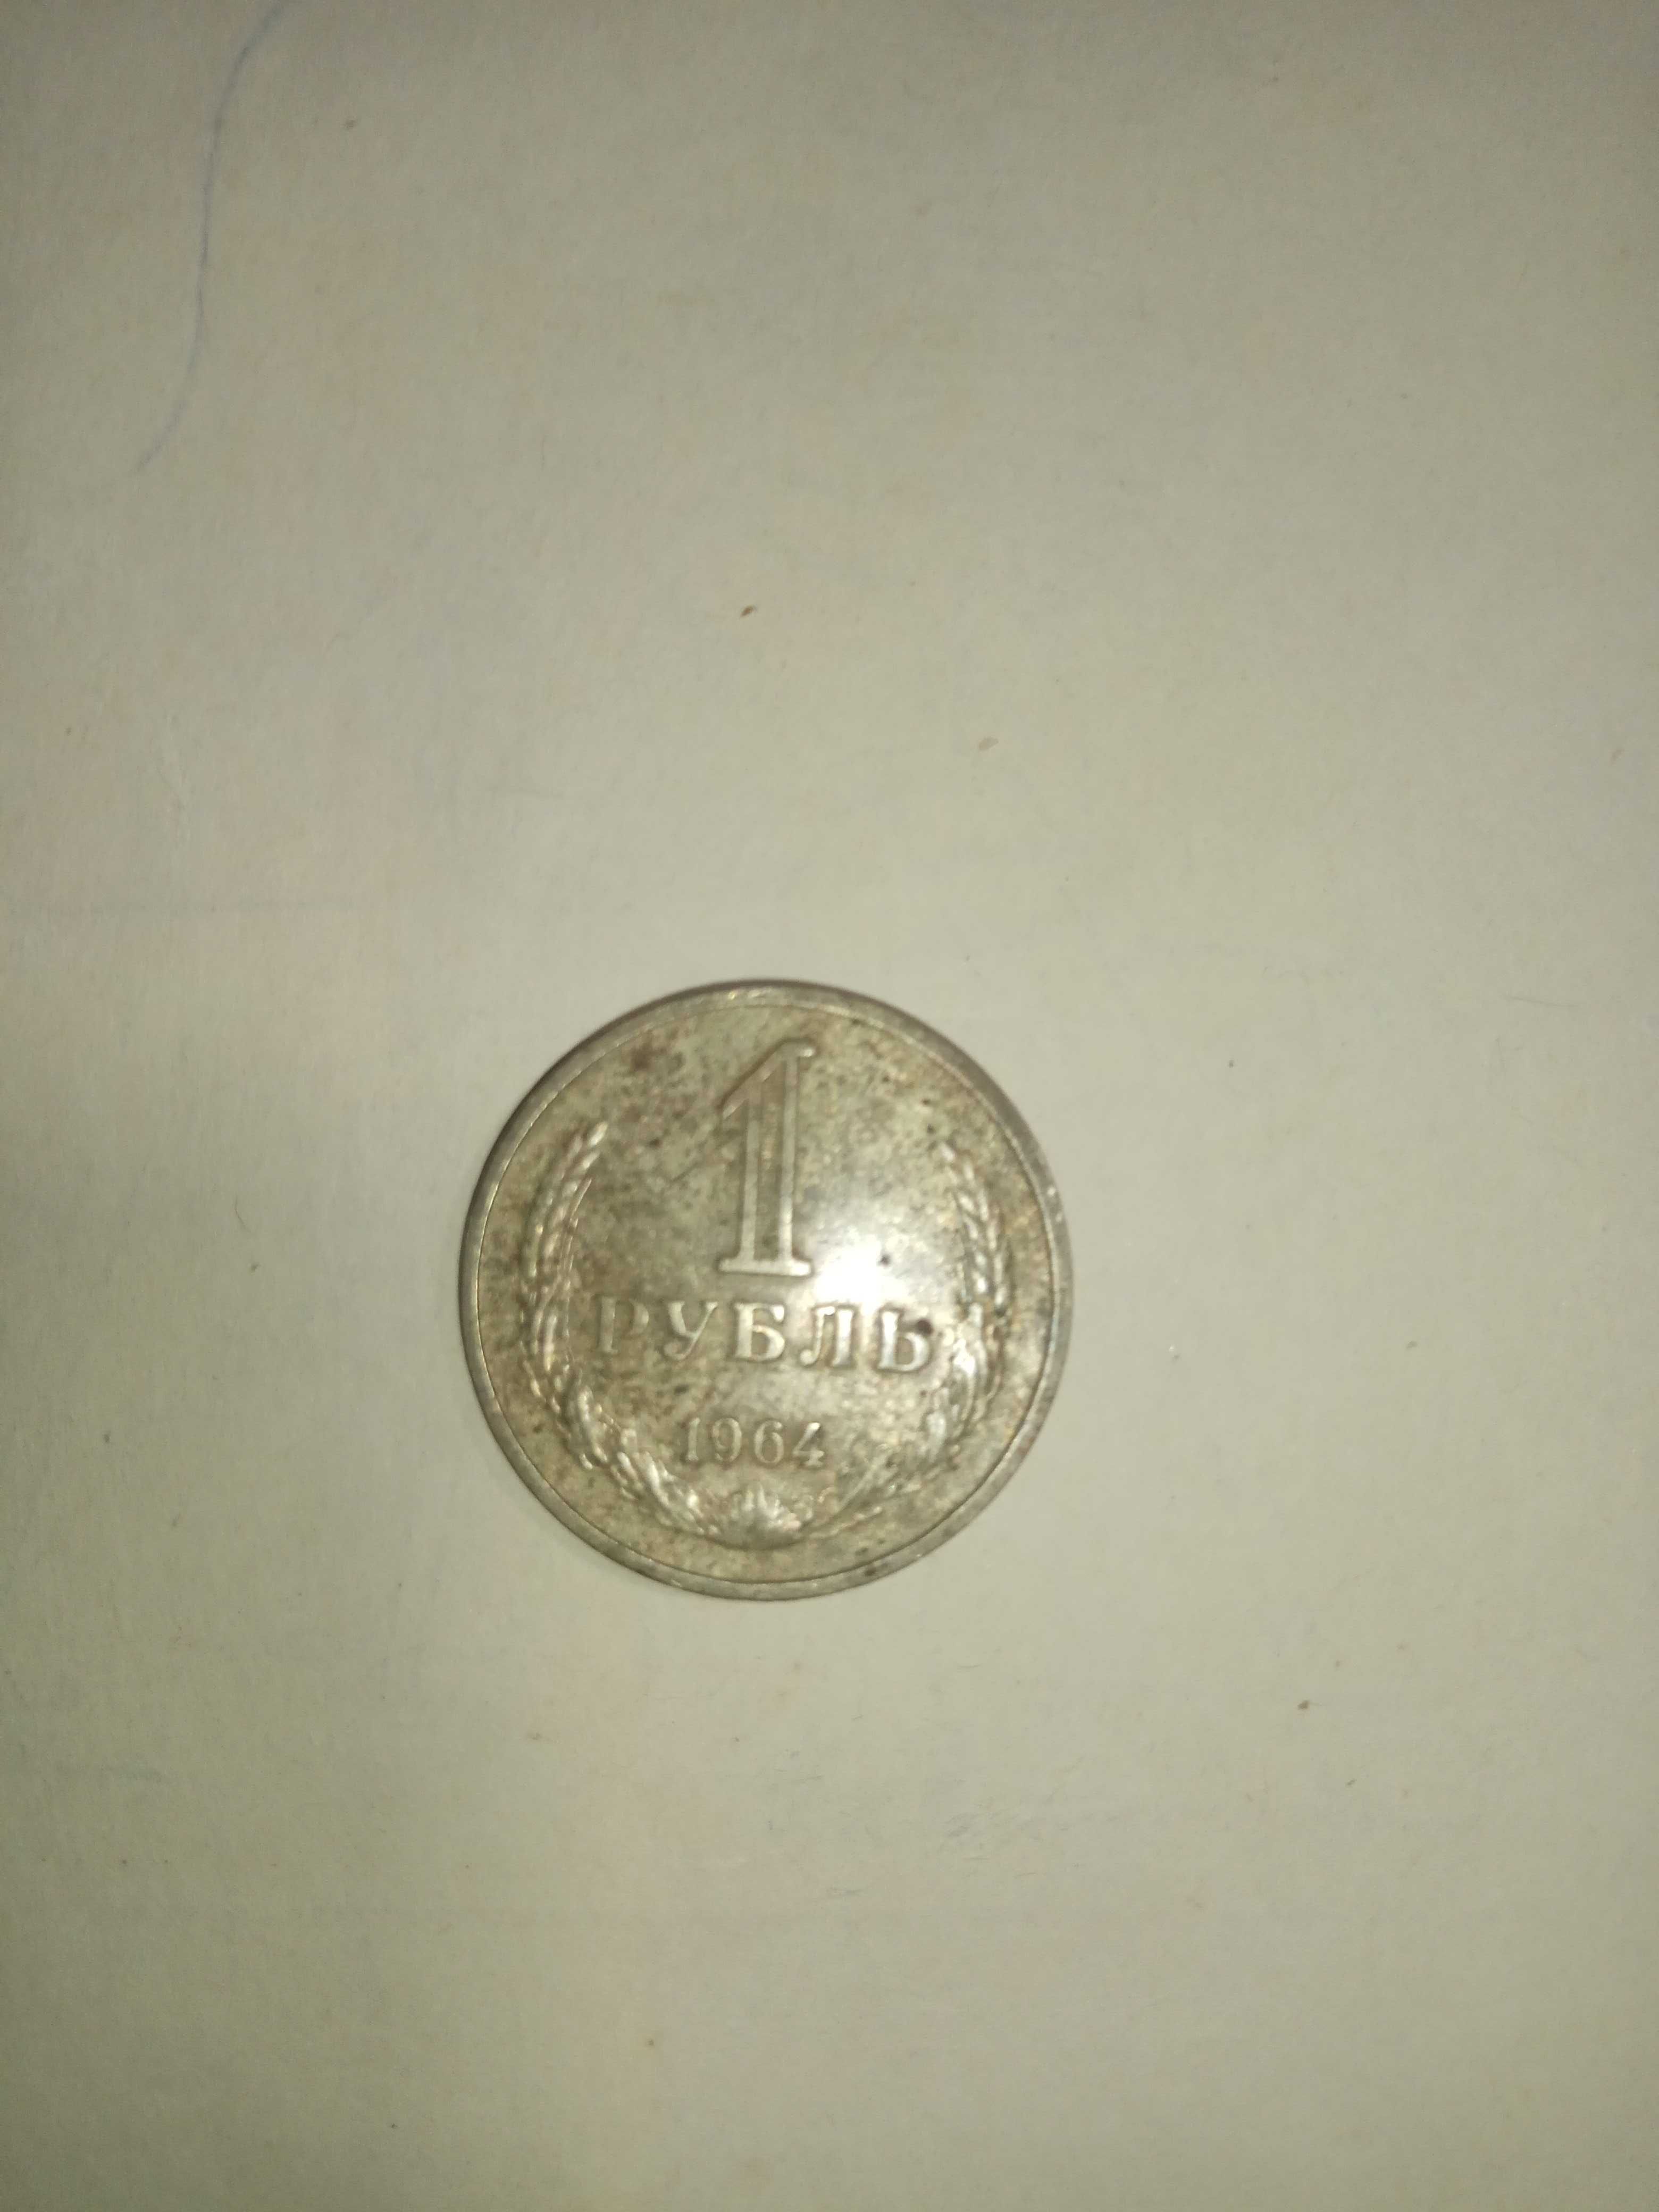 10 гривен ТРО,  50 центов евро 2002 г. и 1 рубль 1964 г.